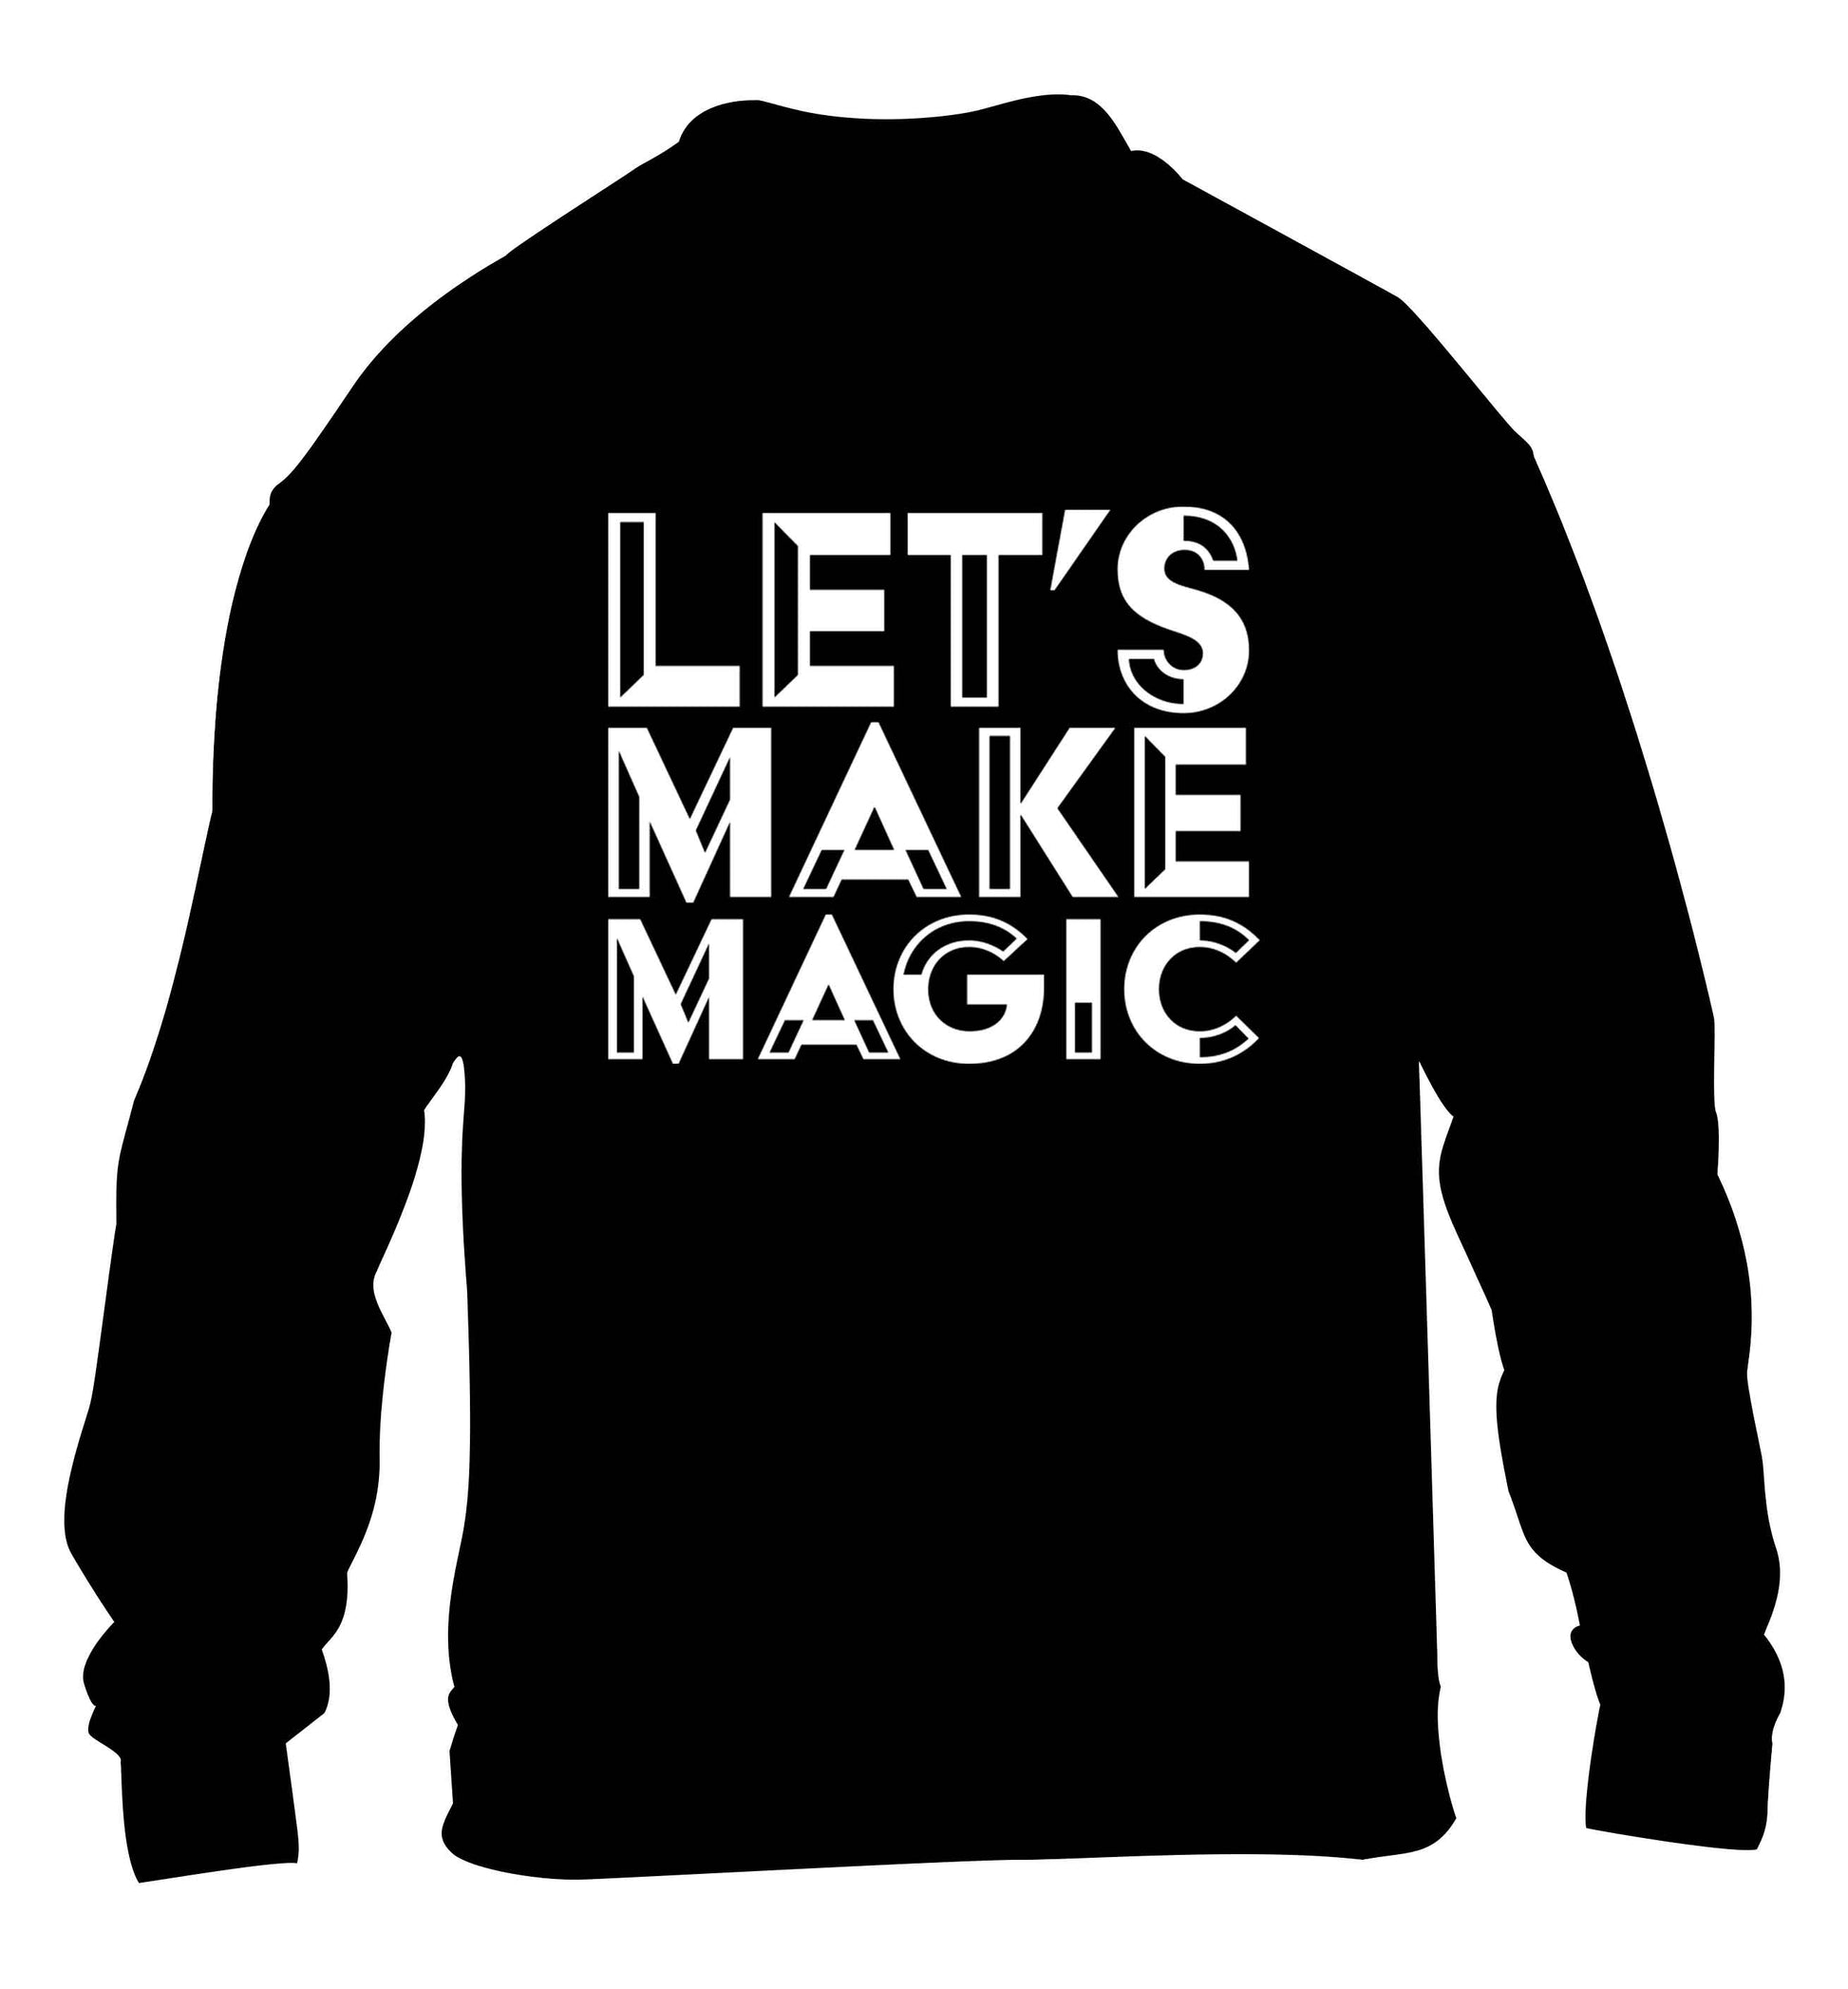 Let's make magic children's black sweater 12-13 Years